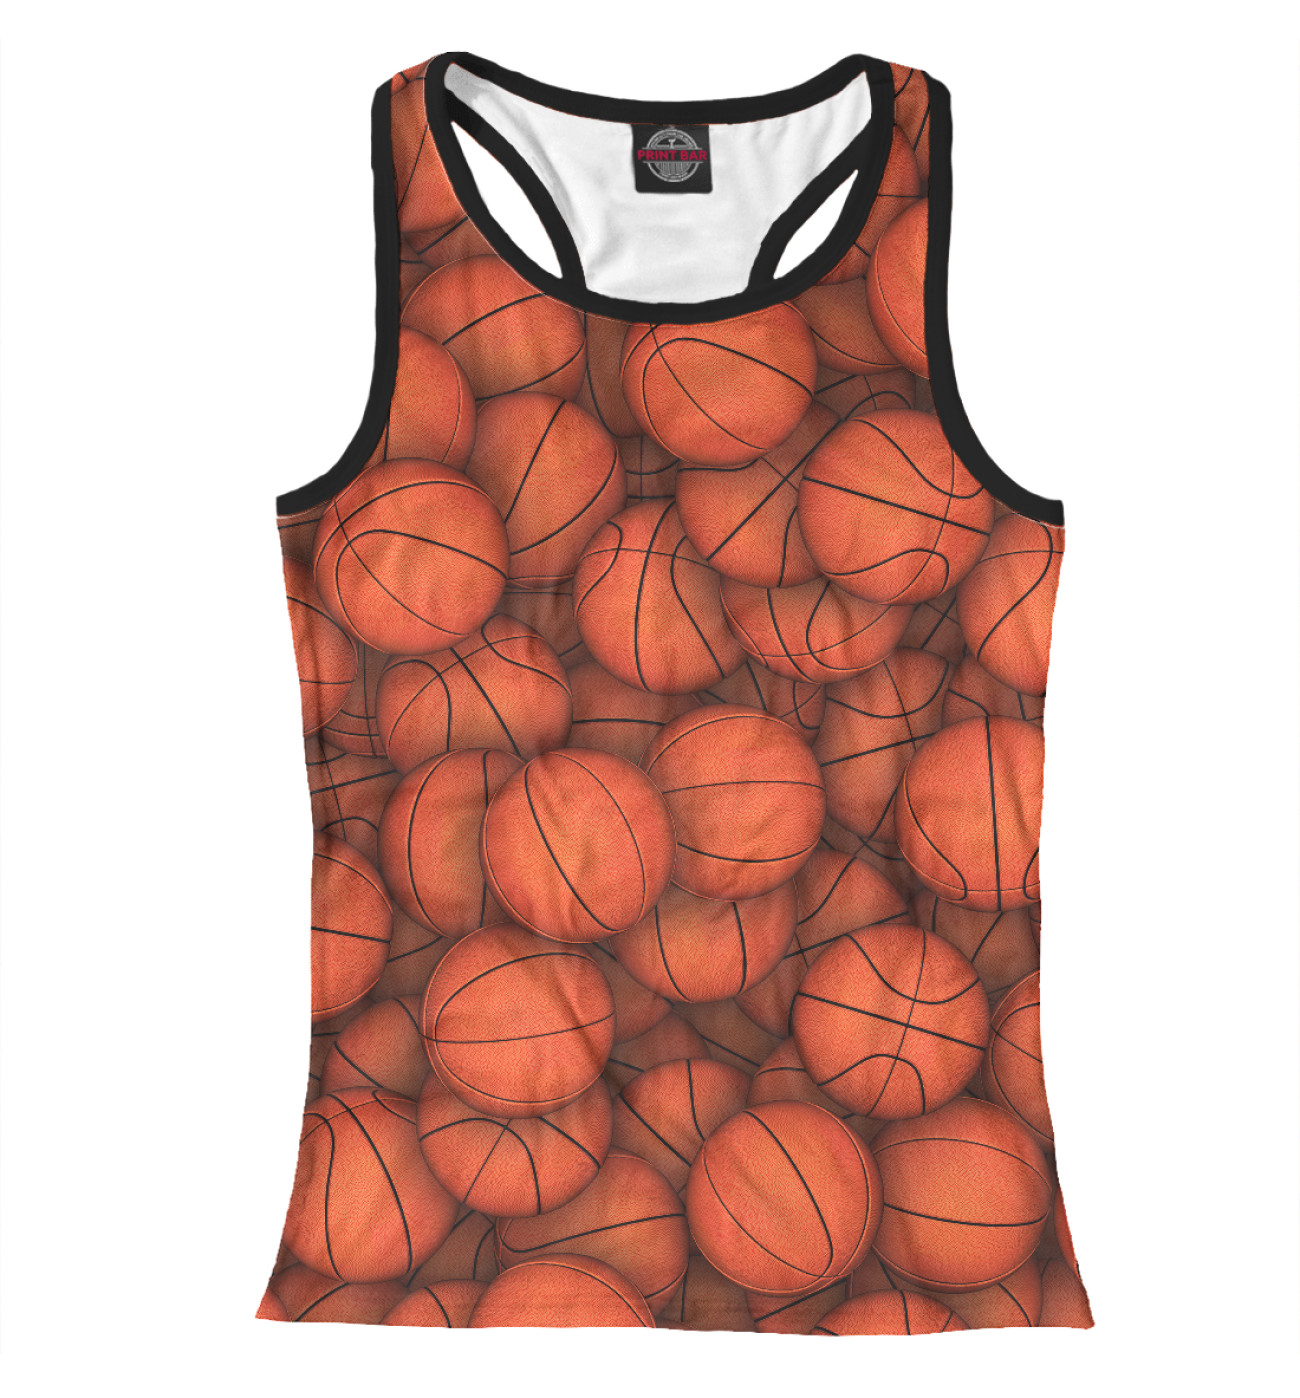 Женская Борцовка Баскетбольные мячи, артикул: NBA-986102-mayb-1